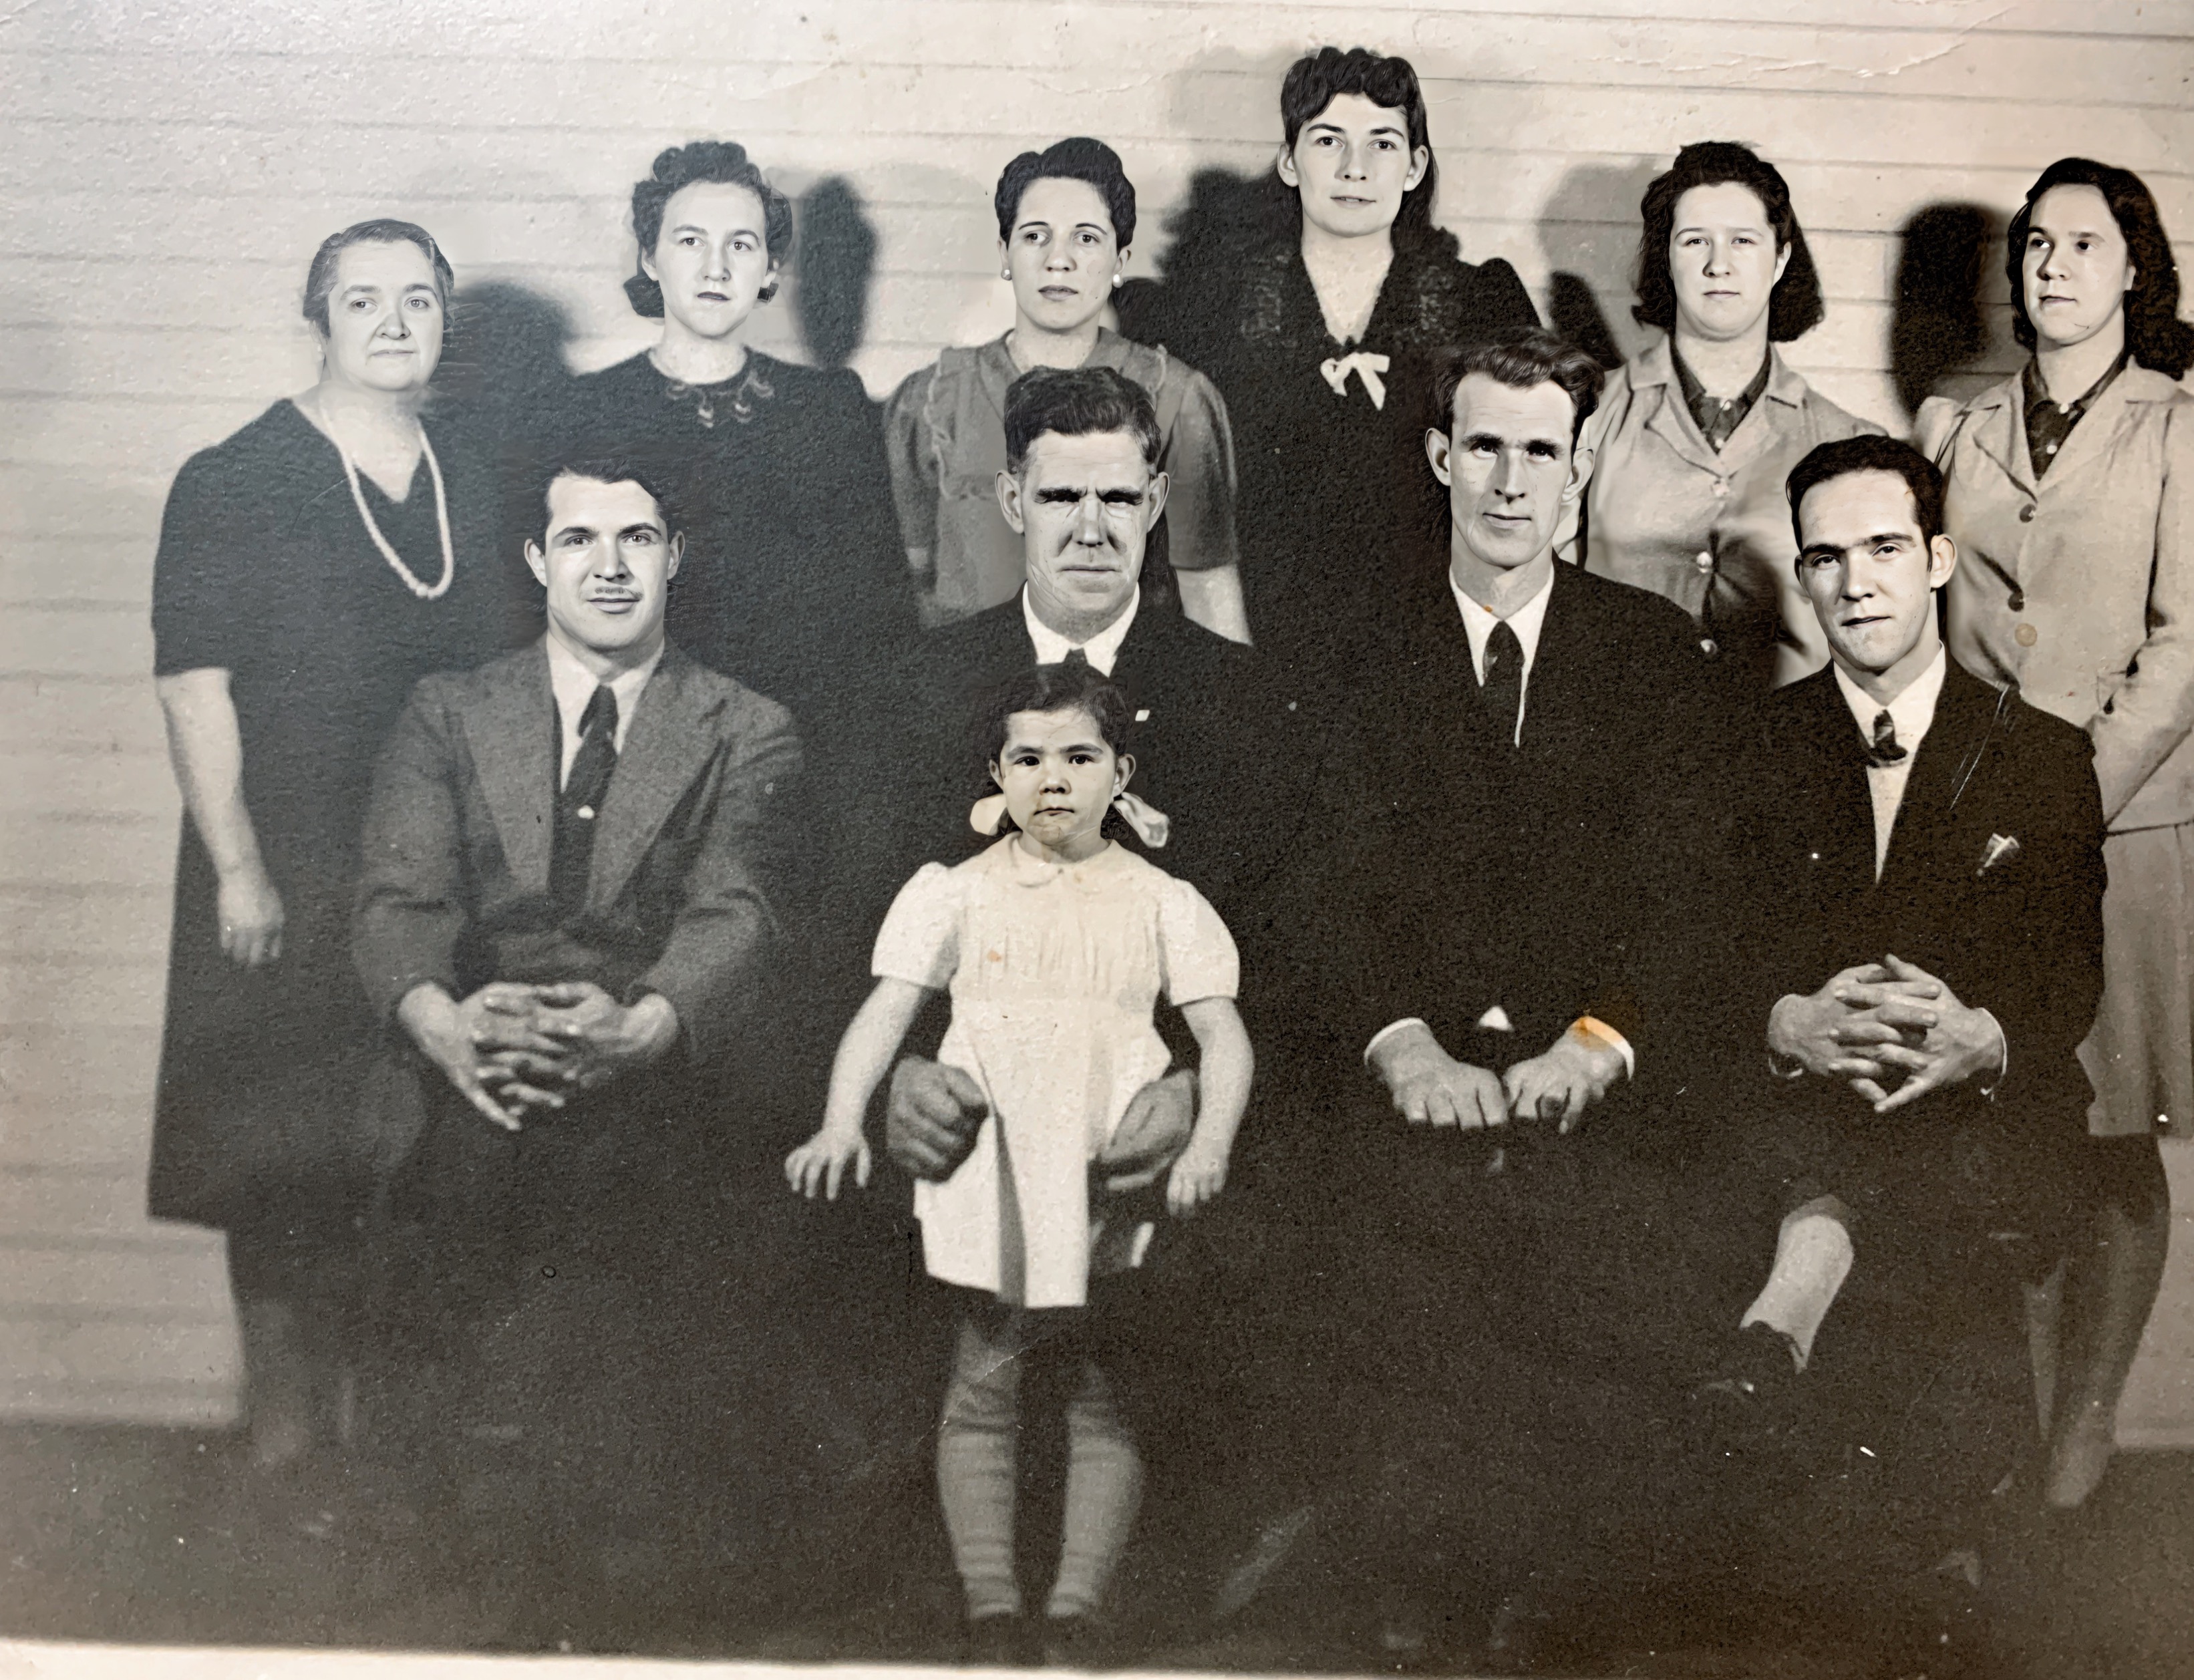 Boyington family photo around 1940-41.Little girl is my husband’s mom.